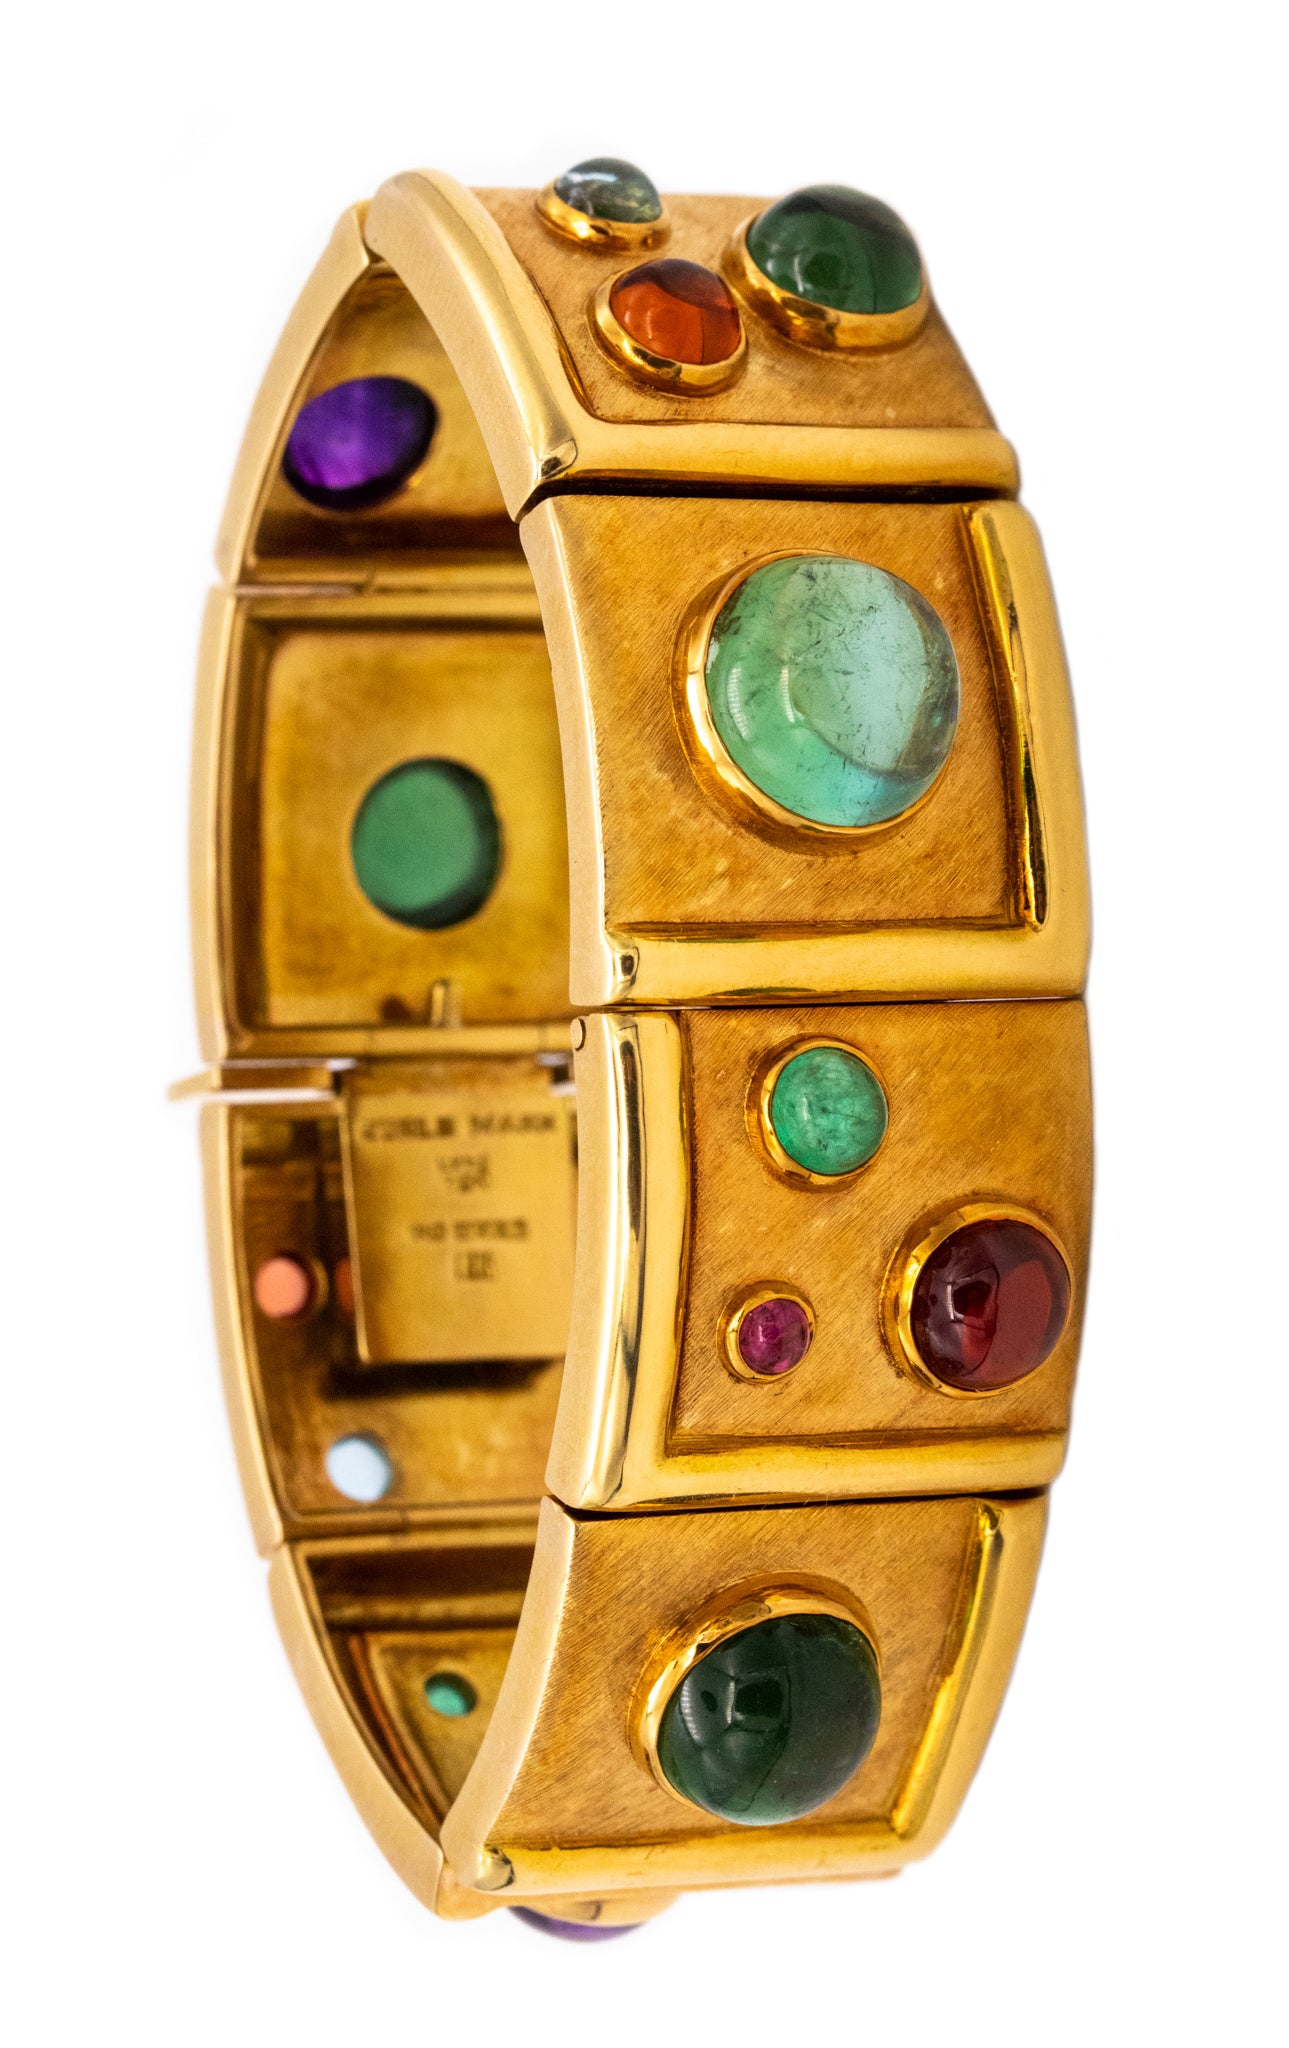 *Burle Marx Brazil 1970 geometric bracelet in 18 kt yellow gold with 27 Ctw in multi gemstones